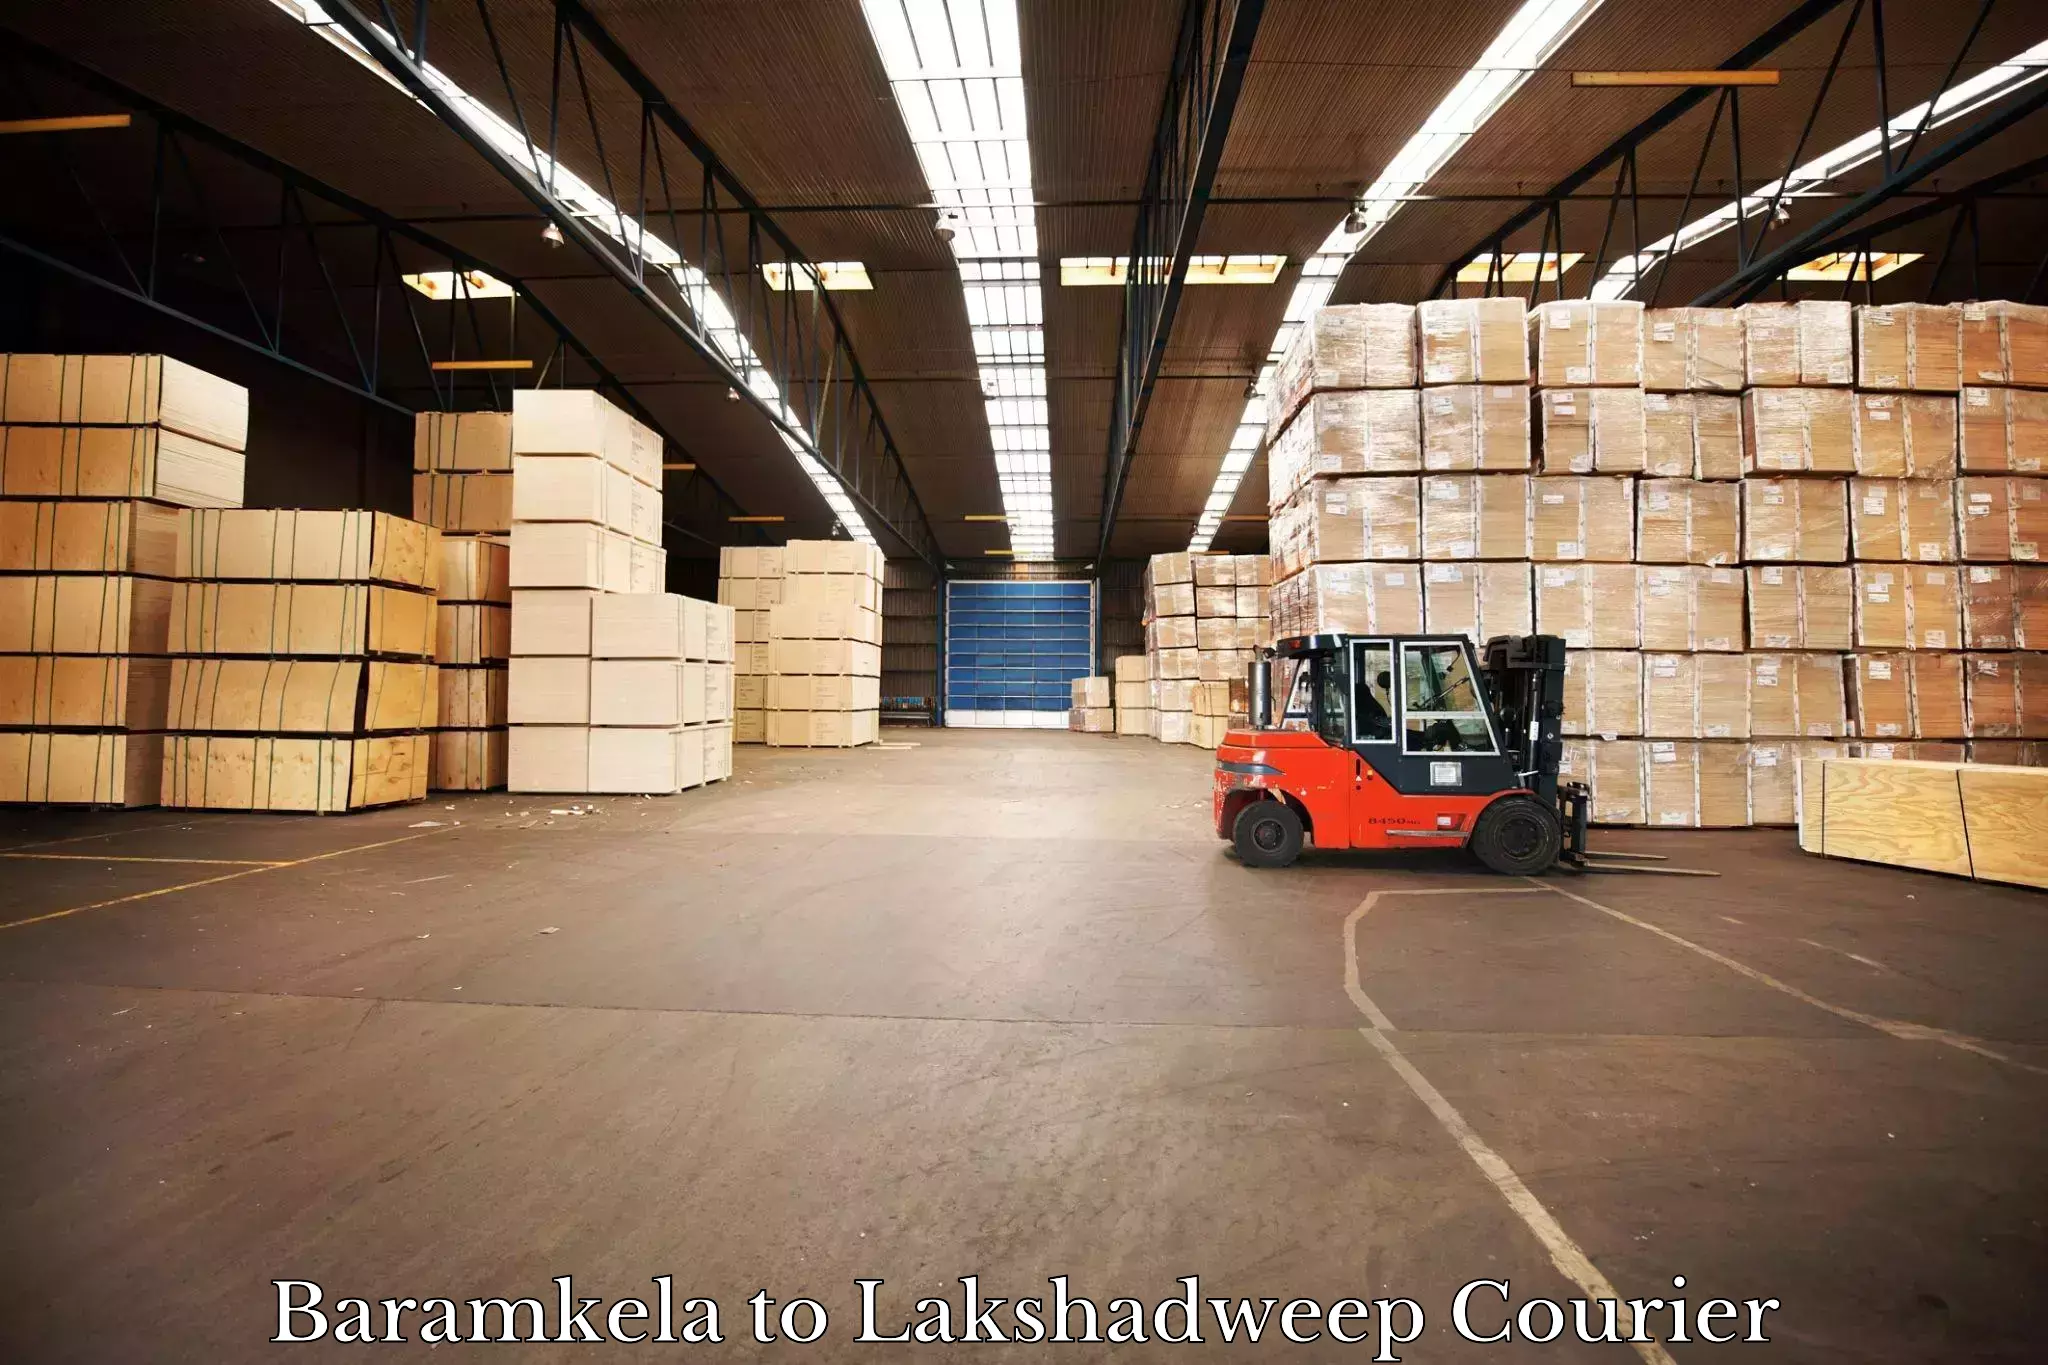 Logistics service provider Baramkela to Lakshadweep